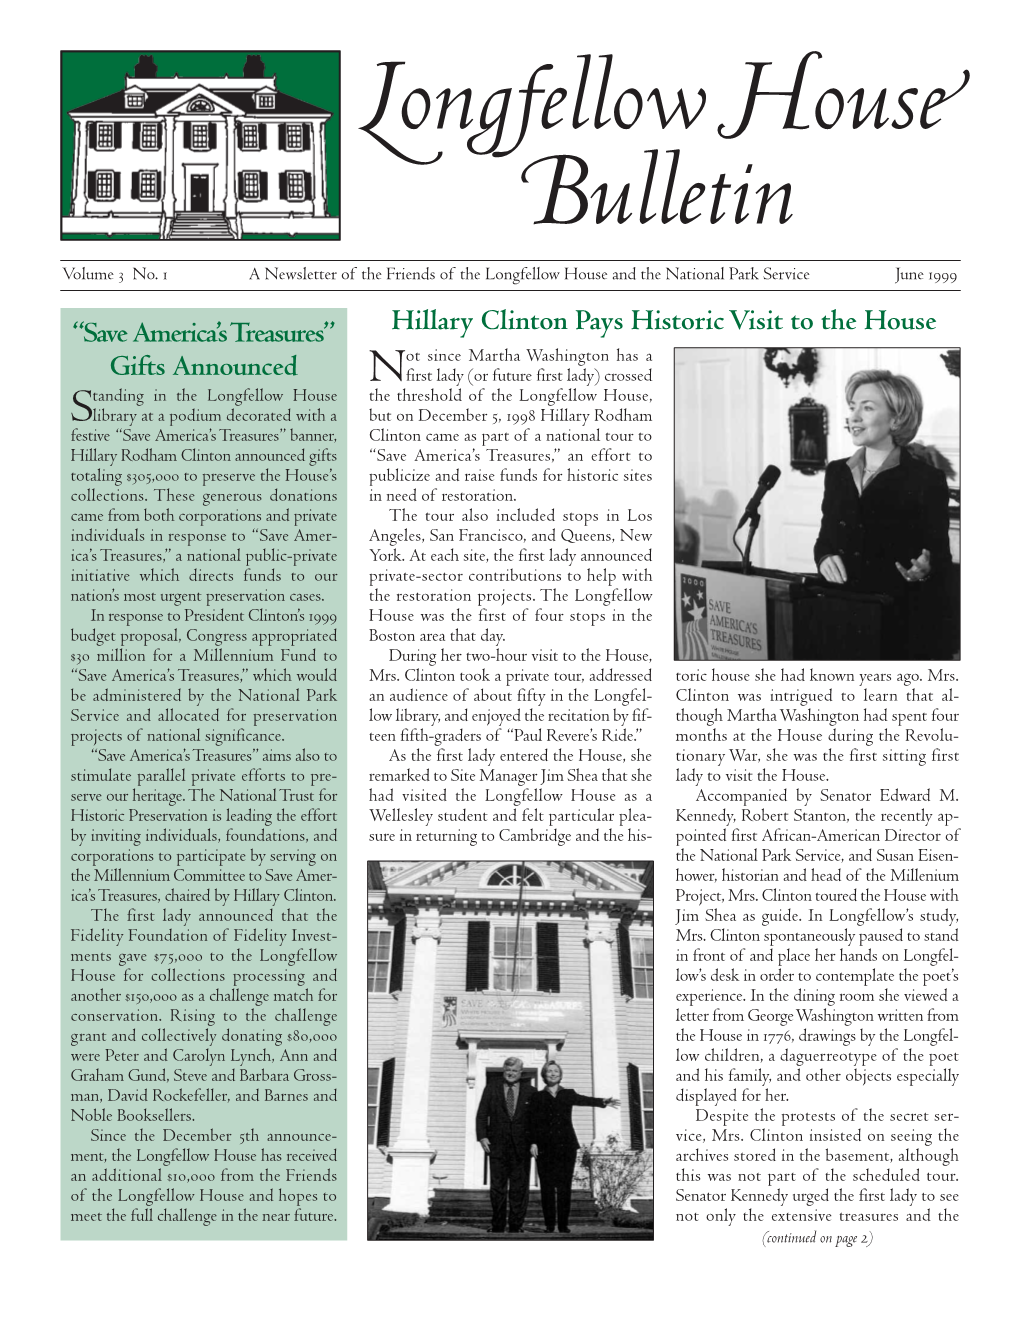 Longfellow House Bulletin, Vol. 3, No. 1, June 1999